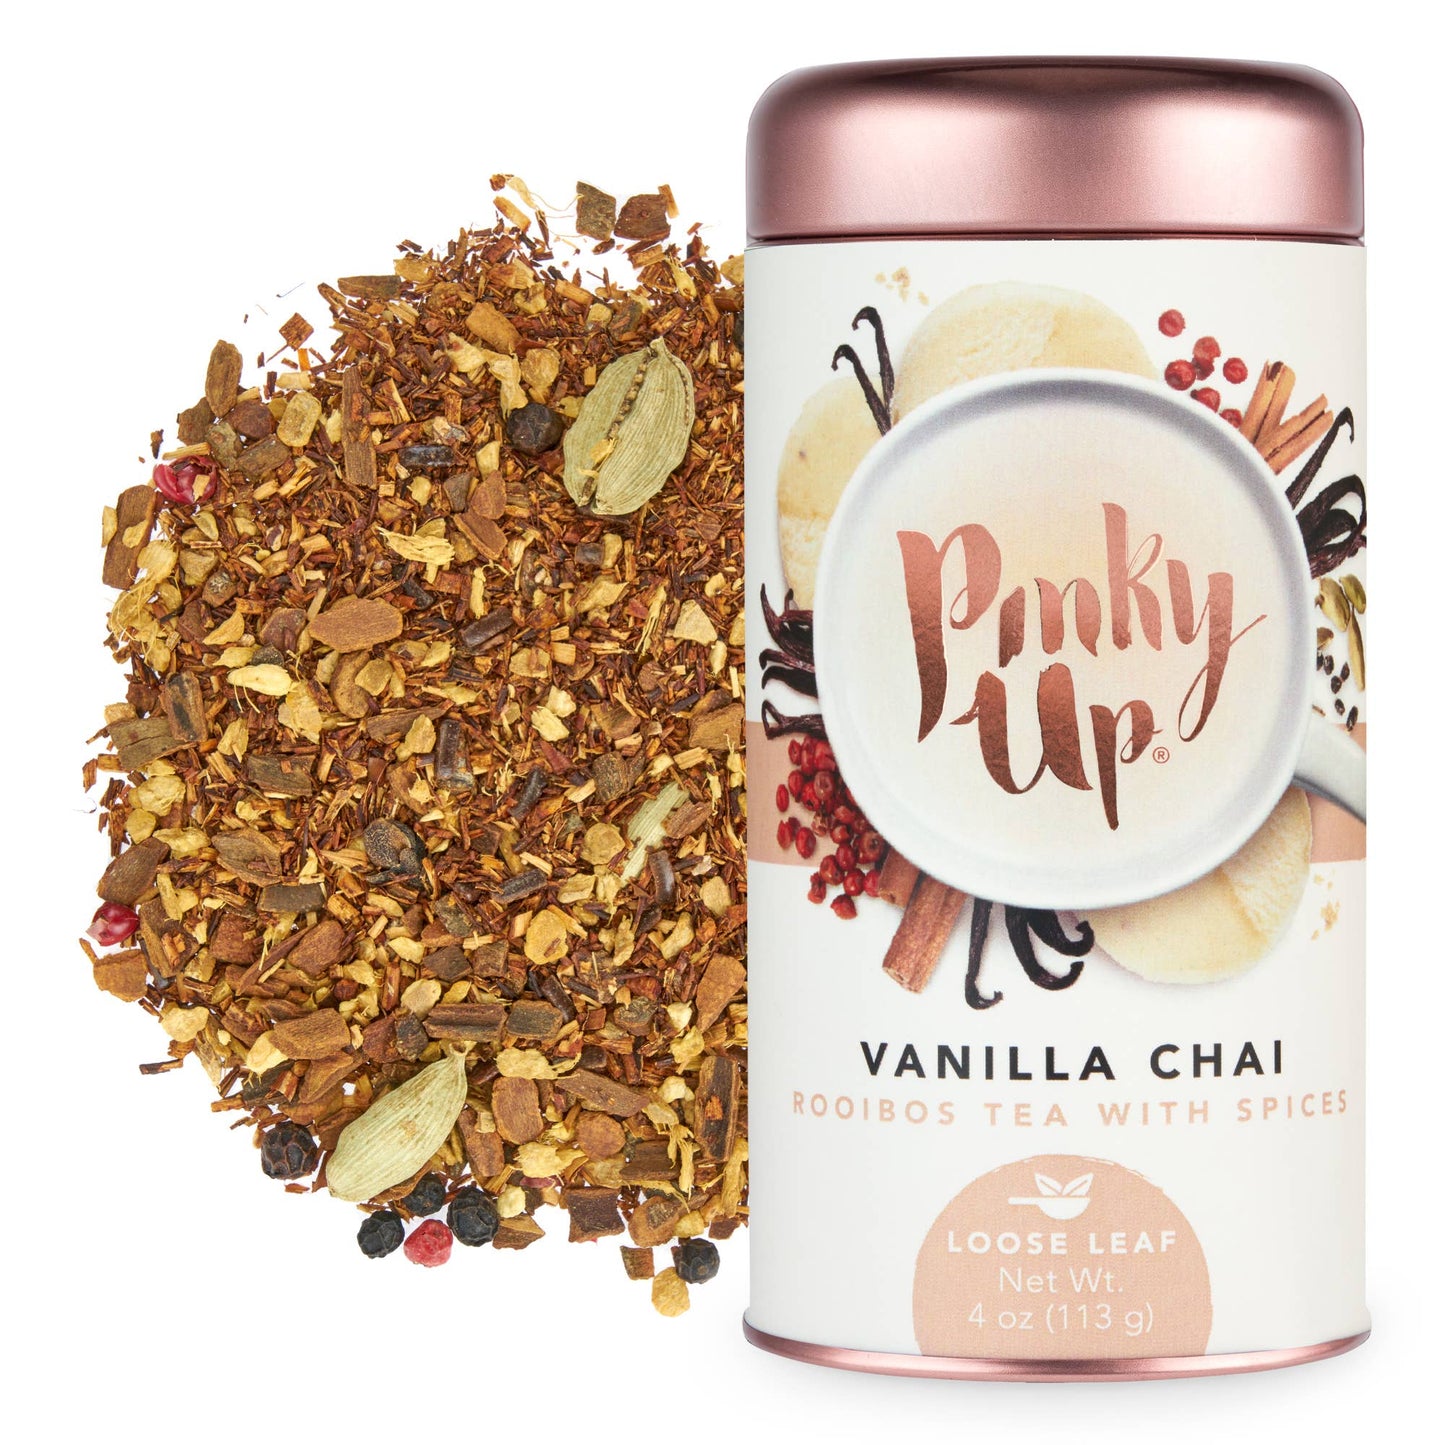 Vanilla Chai Loose Leaf Tea by Pinky Up®